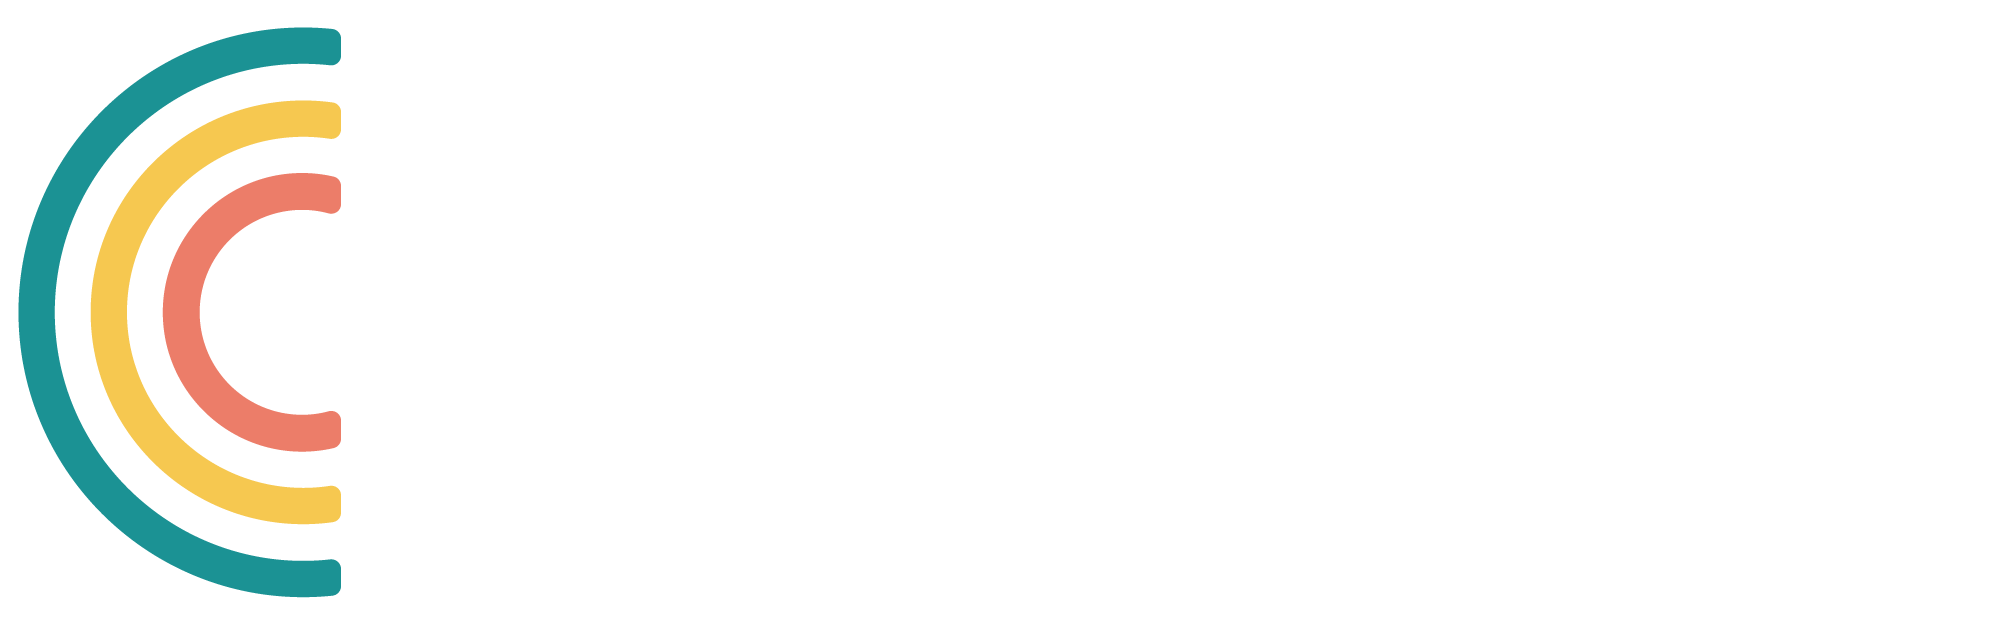 Logo Charlotte Hilario